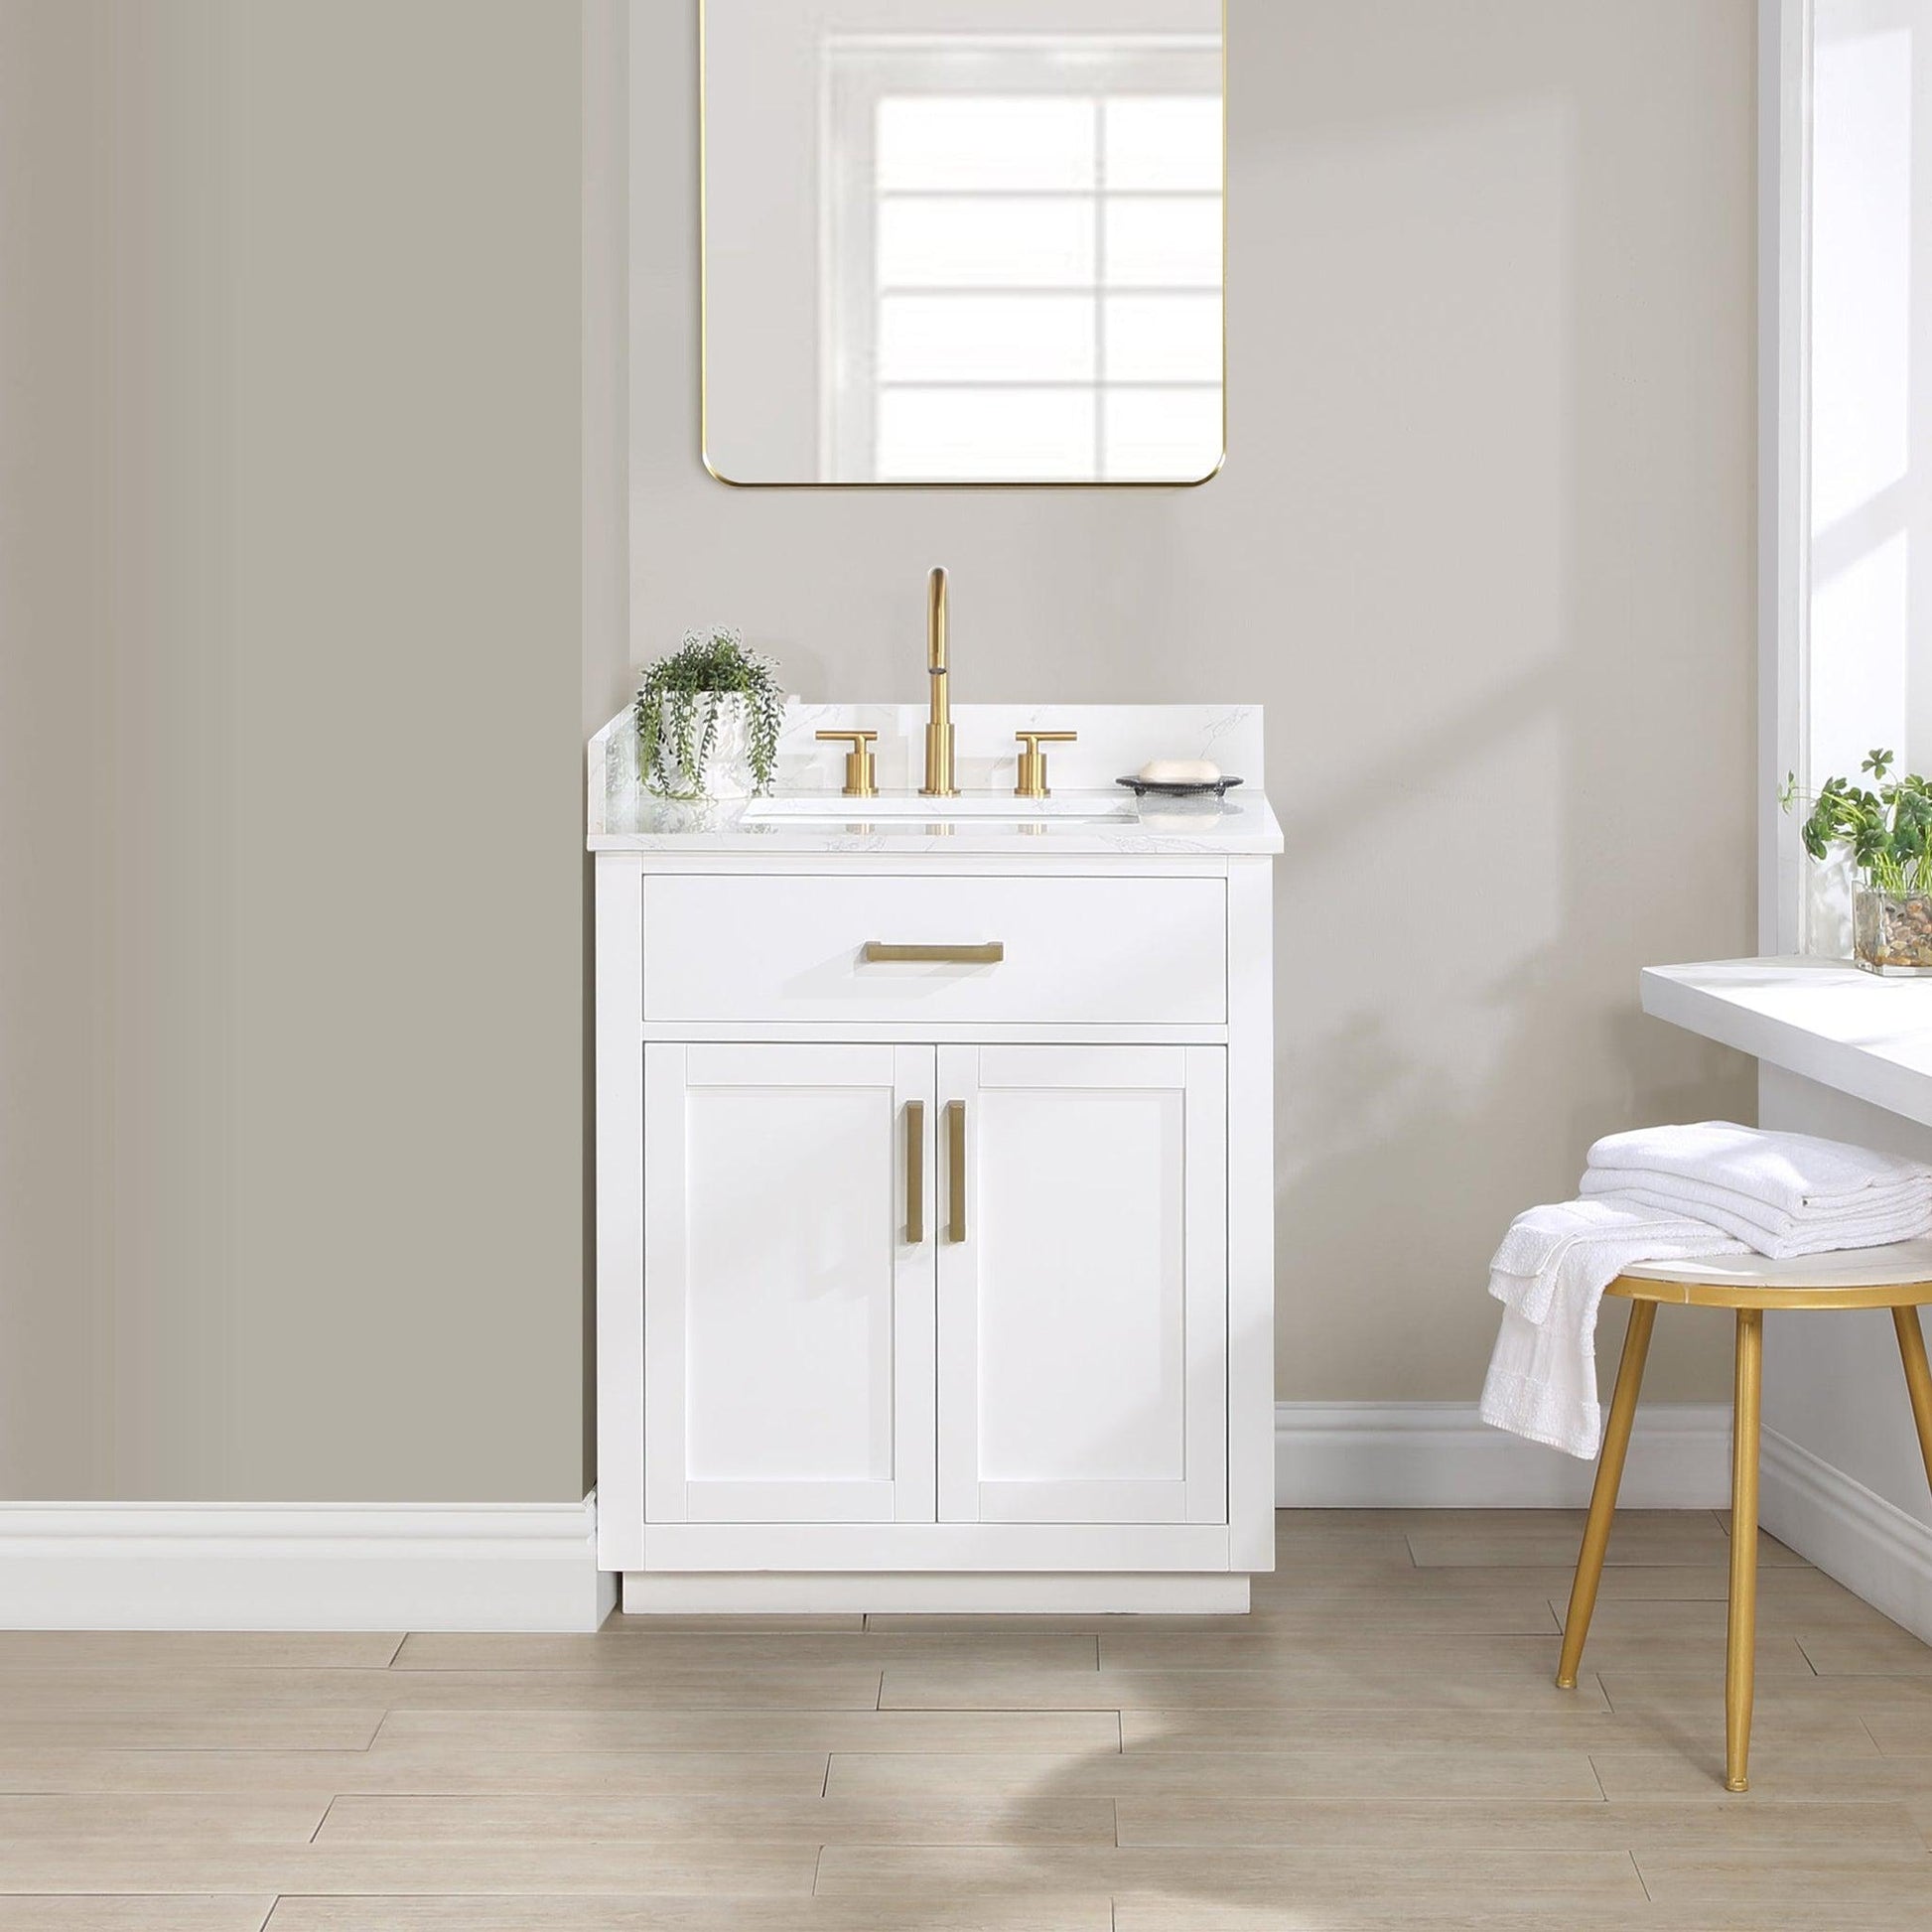 Altair Gavino 30" White Freestanding Single Bathroom Vanity Set With Grain White Composite Stone Top, Single Rectangular Undermount Ceramic Sink, Overflow, Sidesplash, and Backsplash